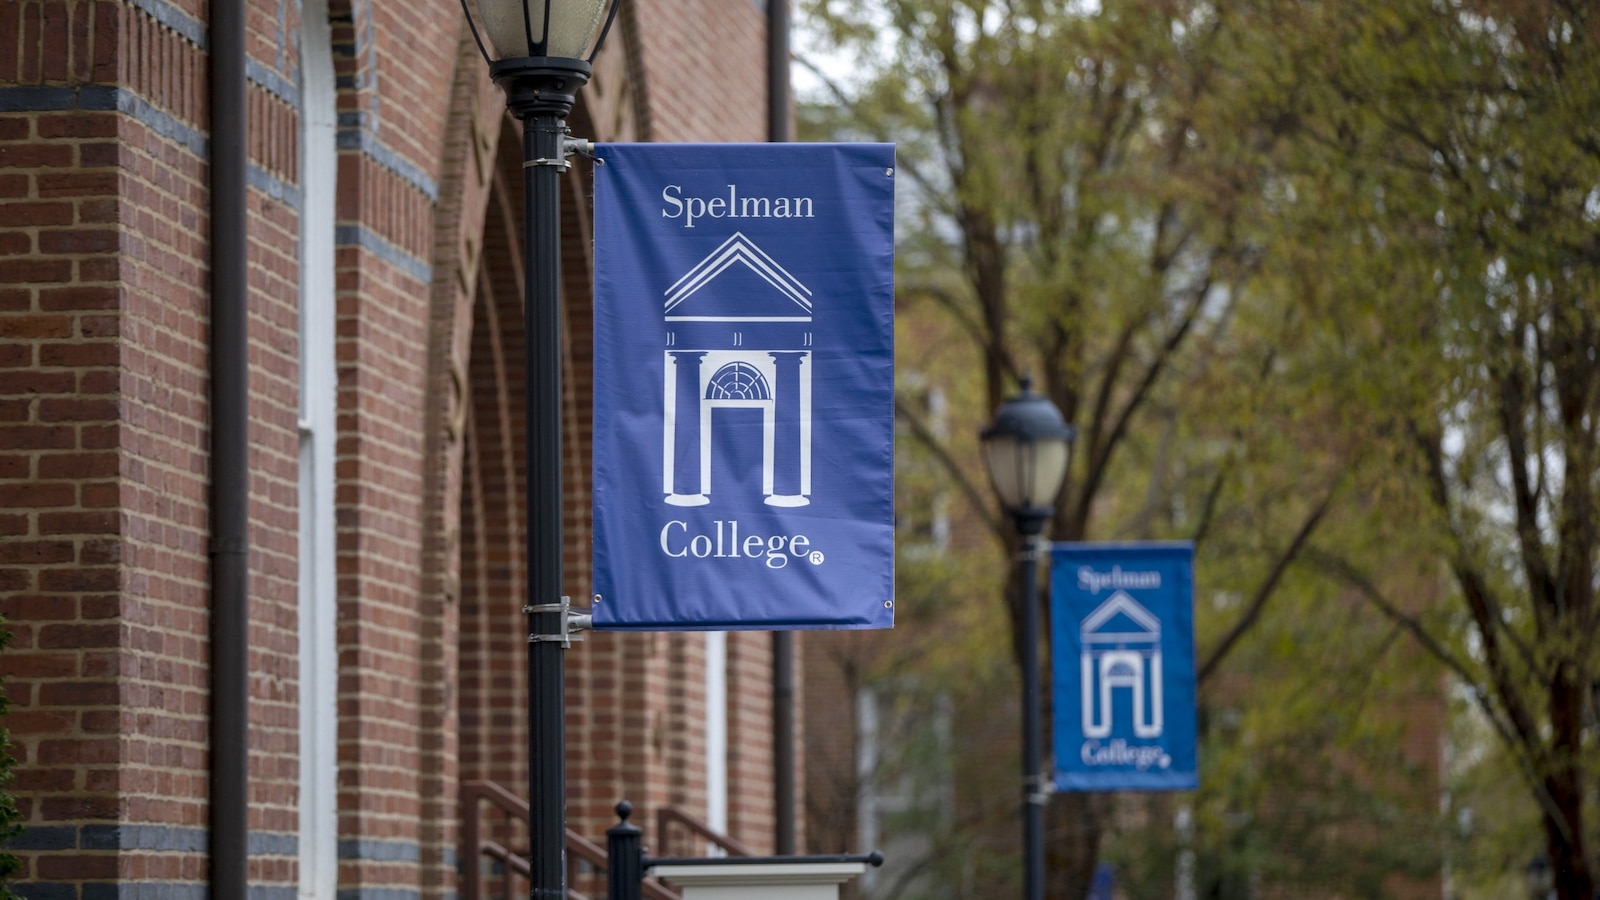 Spelman College receives a groundbreaking donation of $100 million